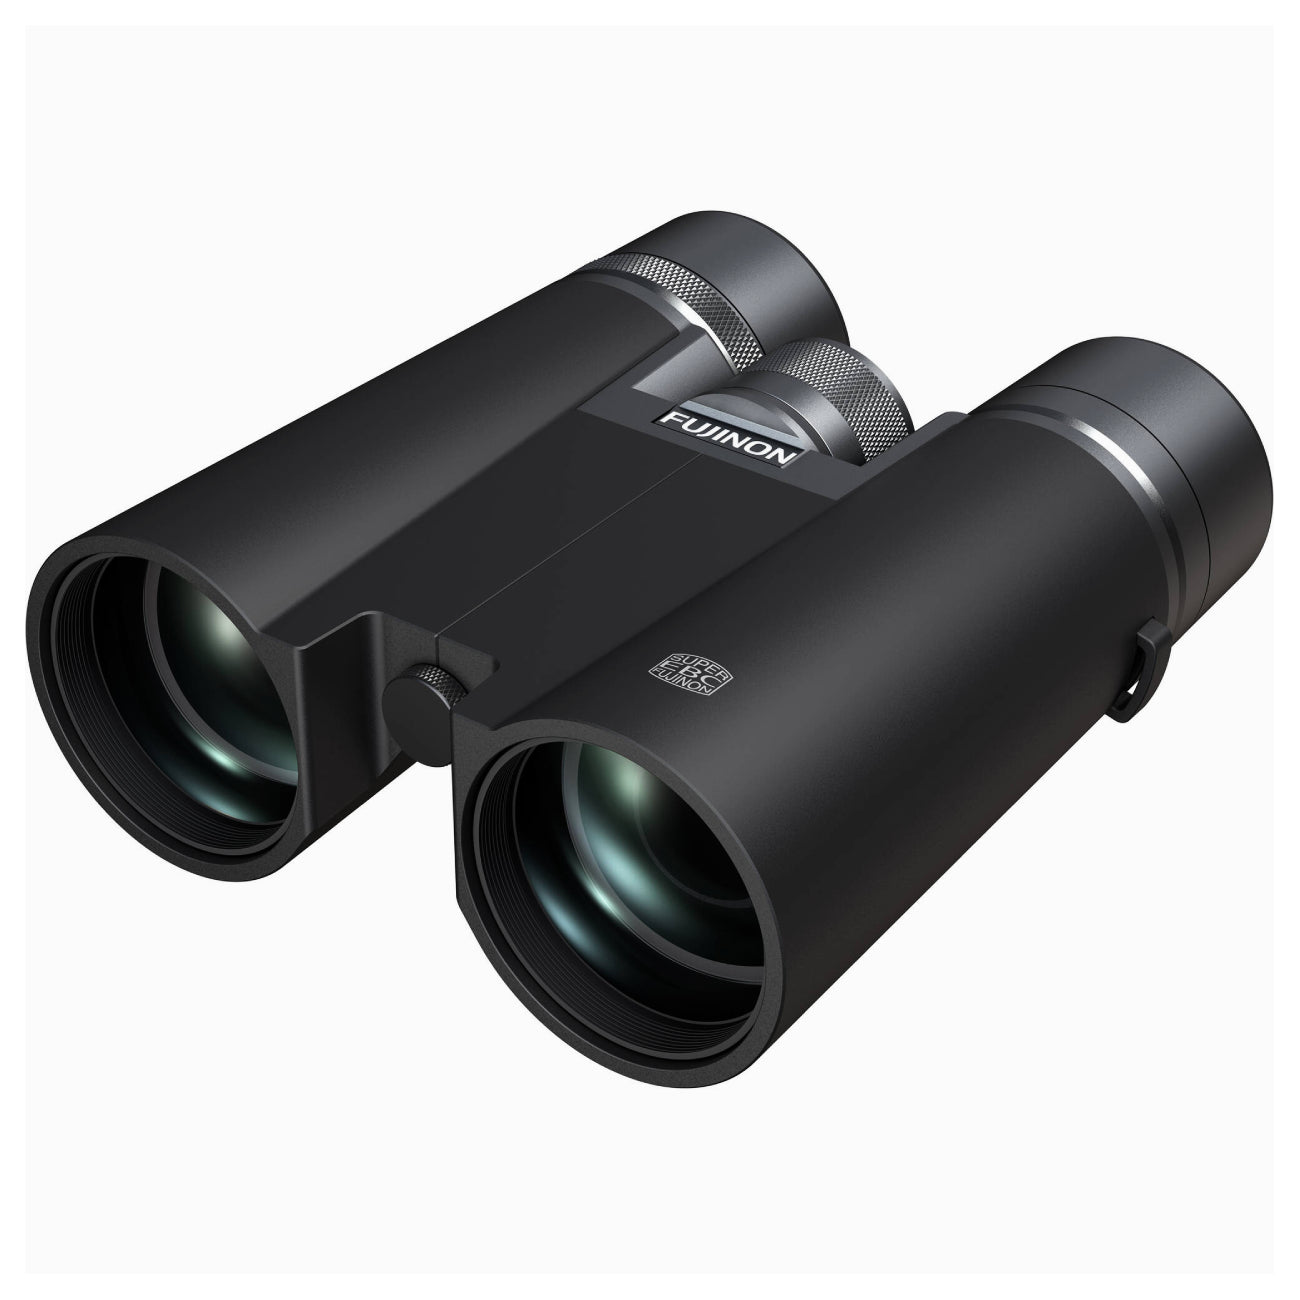 Fujinon 10x42 Hyper Clarity Binoculars / binocular reviews, binoculars online, long distance binoculars